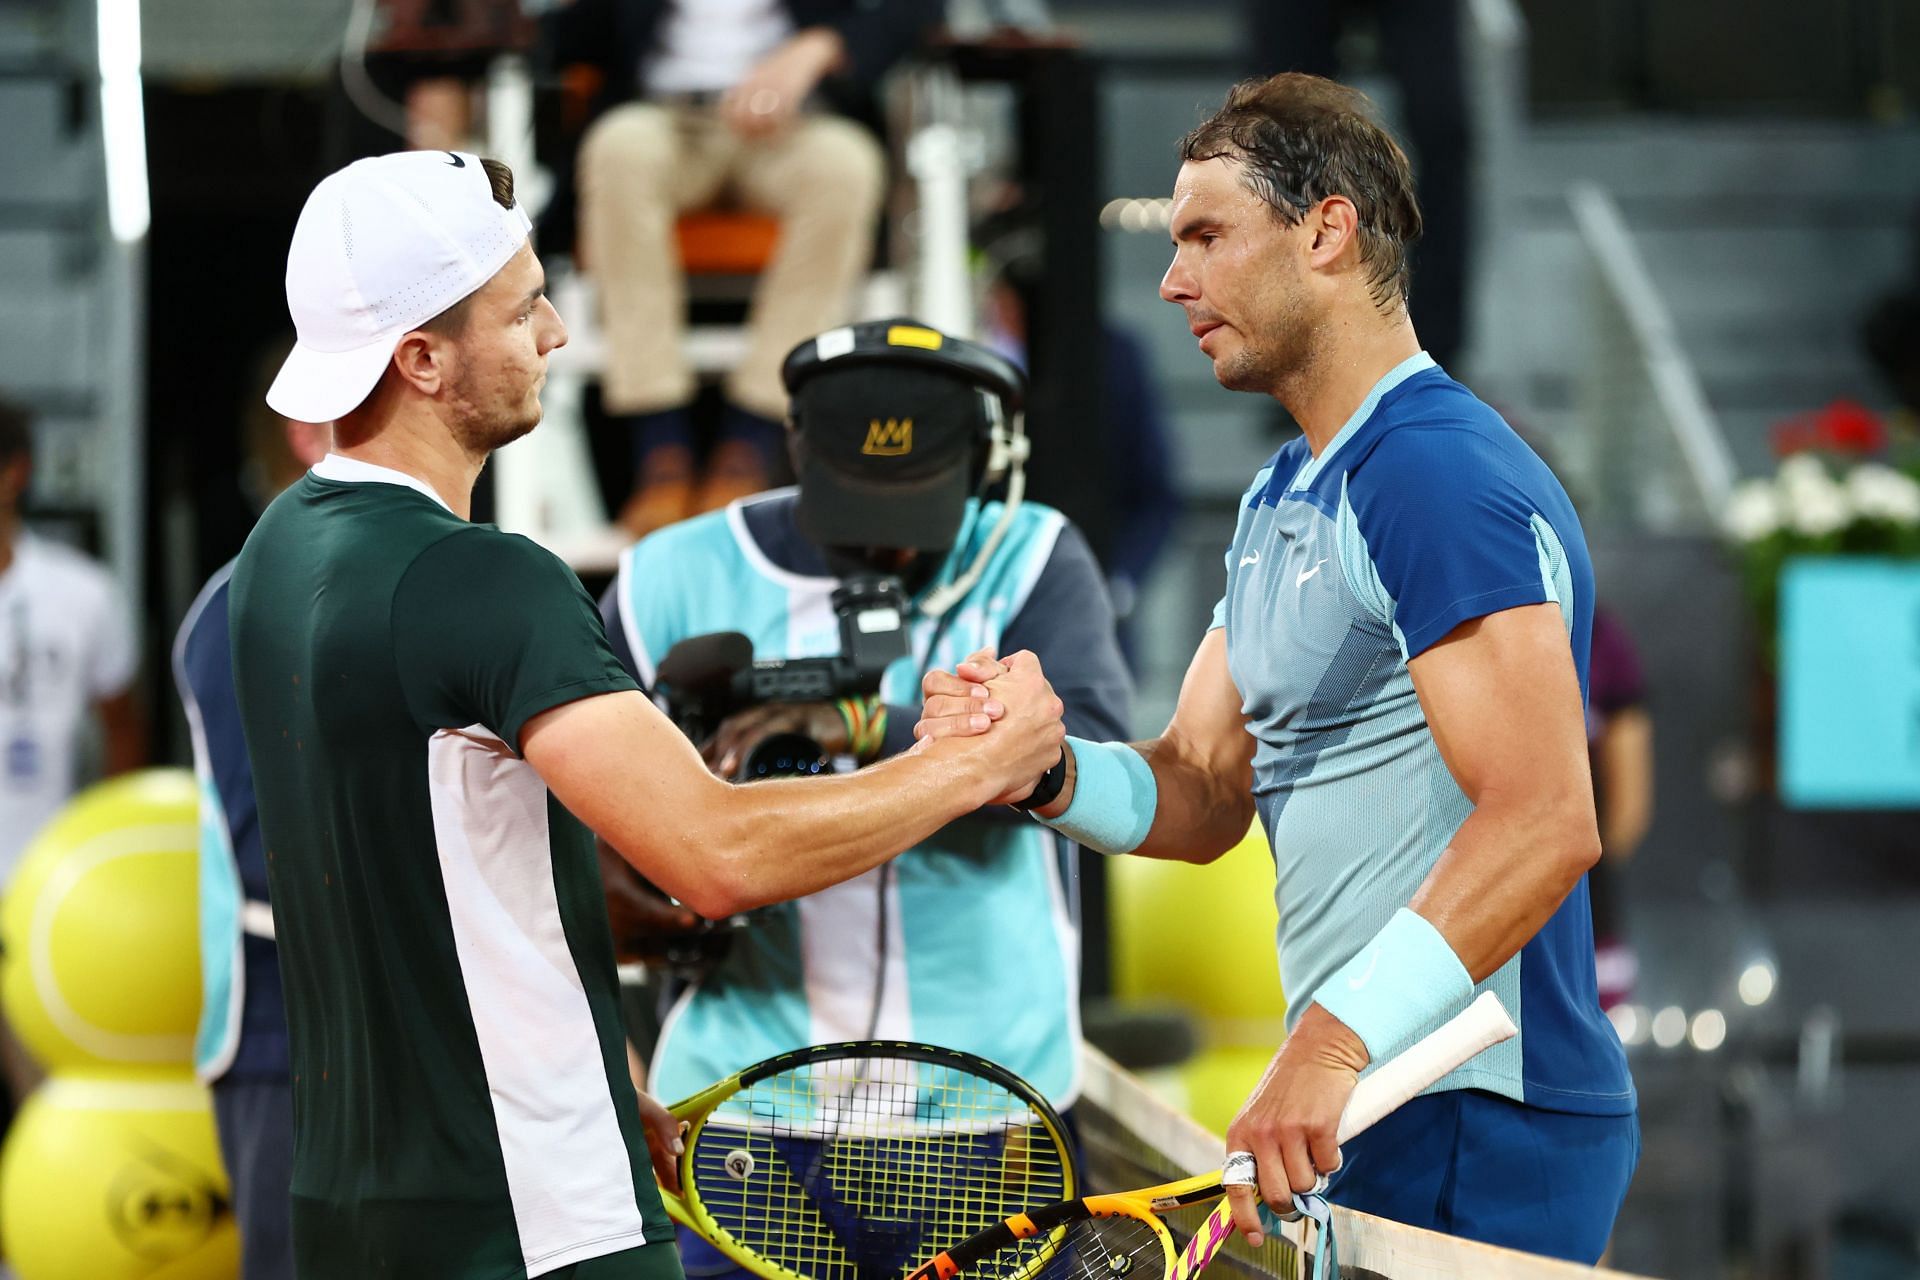 Rafael Nadal and Miomir Kecmanovic interact following their third round match